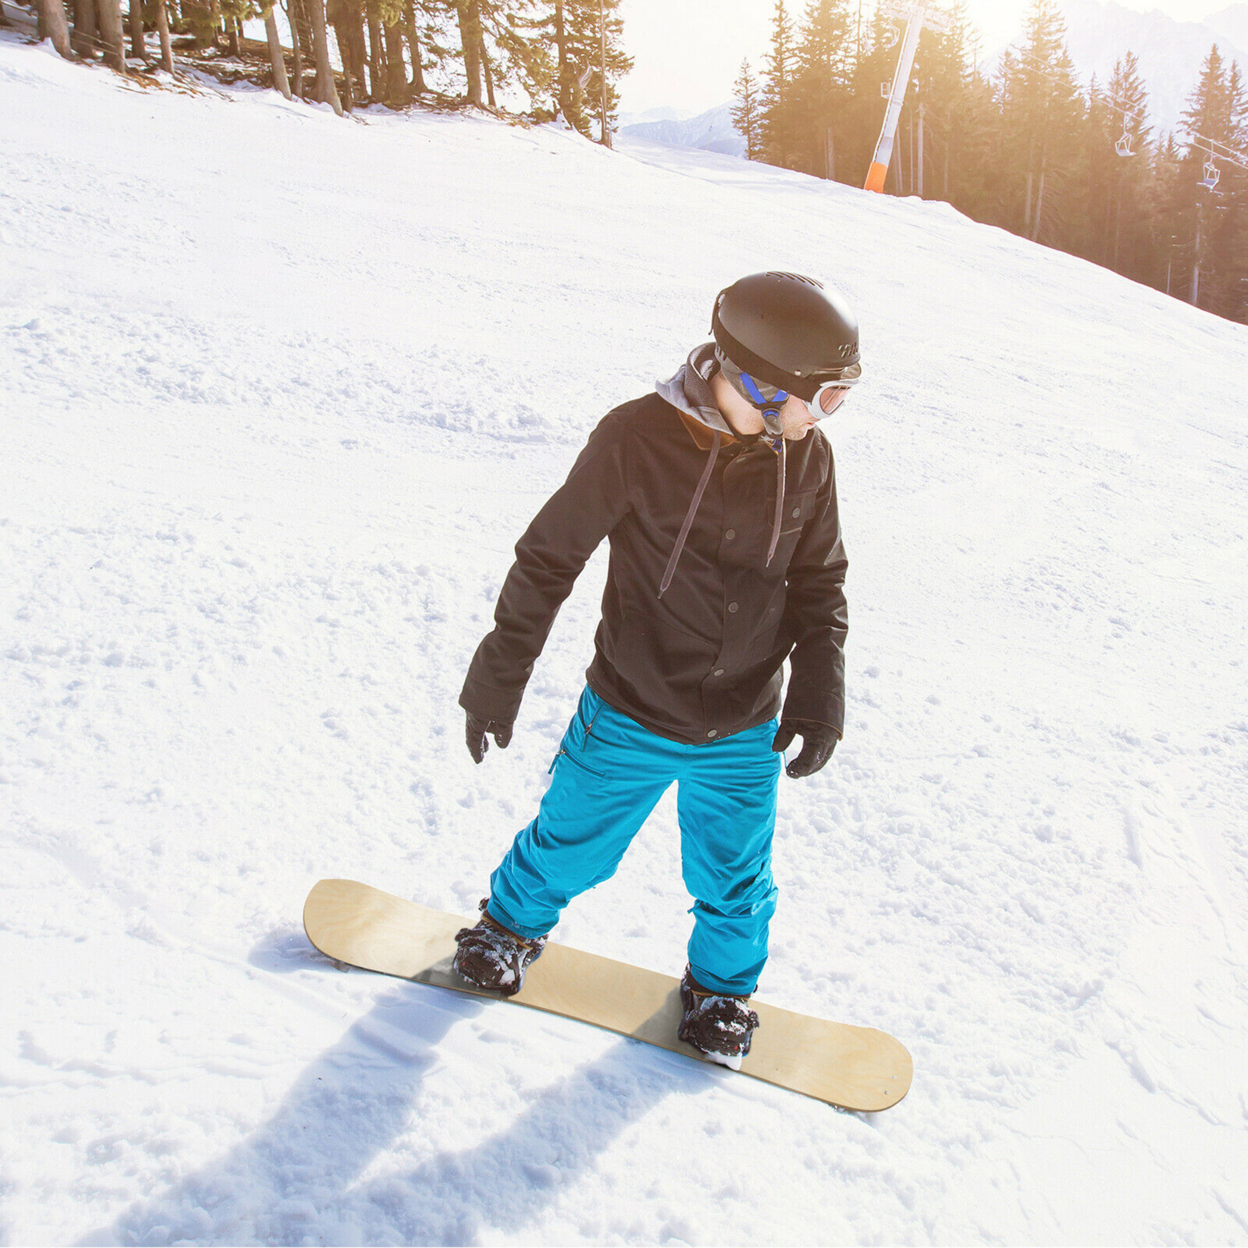 Sledding Board Skiing Board W/Adjustable Foot Straps Winter Sports Snowboarding